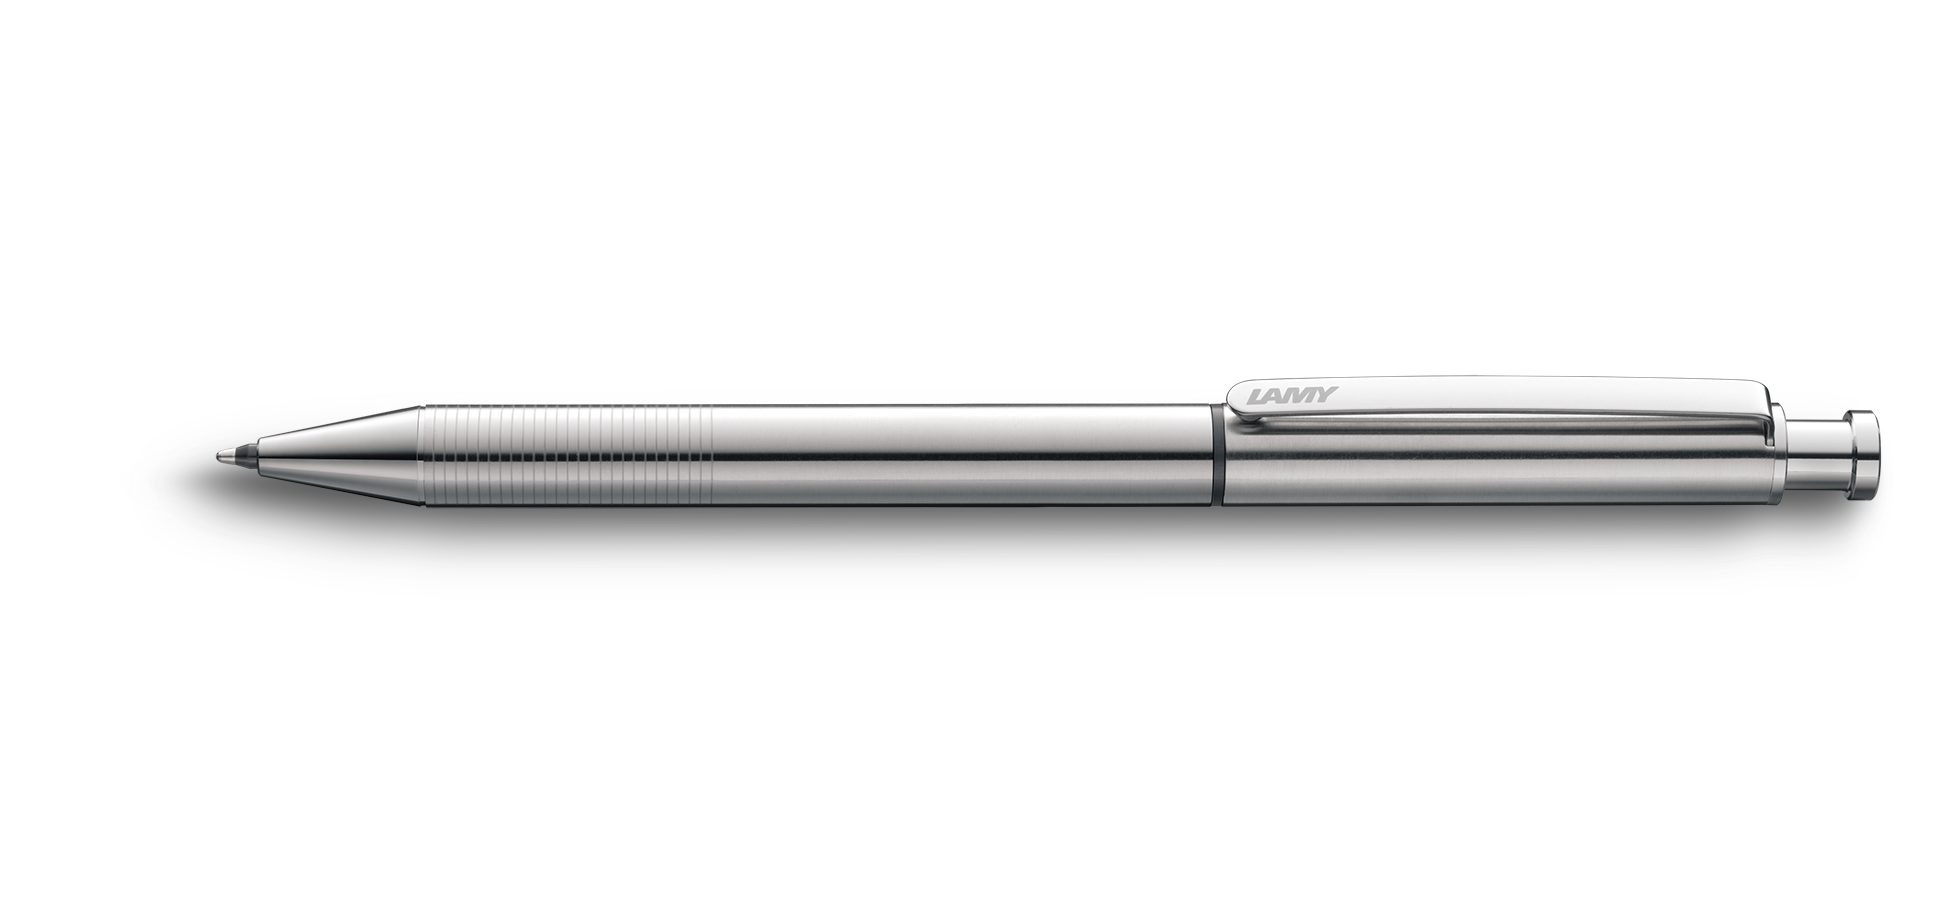 LAMY Kugelschreiber st twin pen [645], Kugelschreiber und Drehbleistift